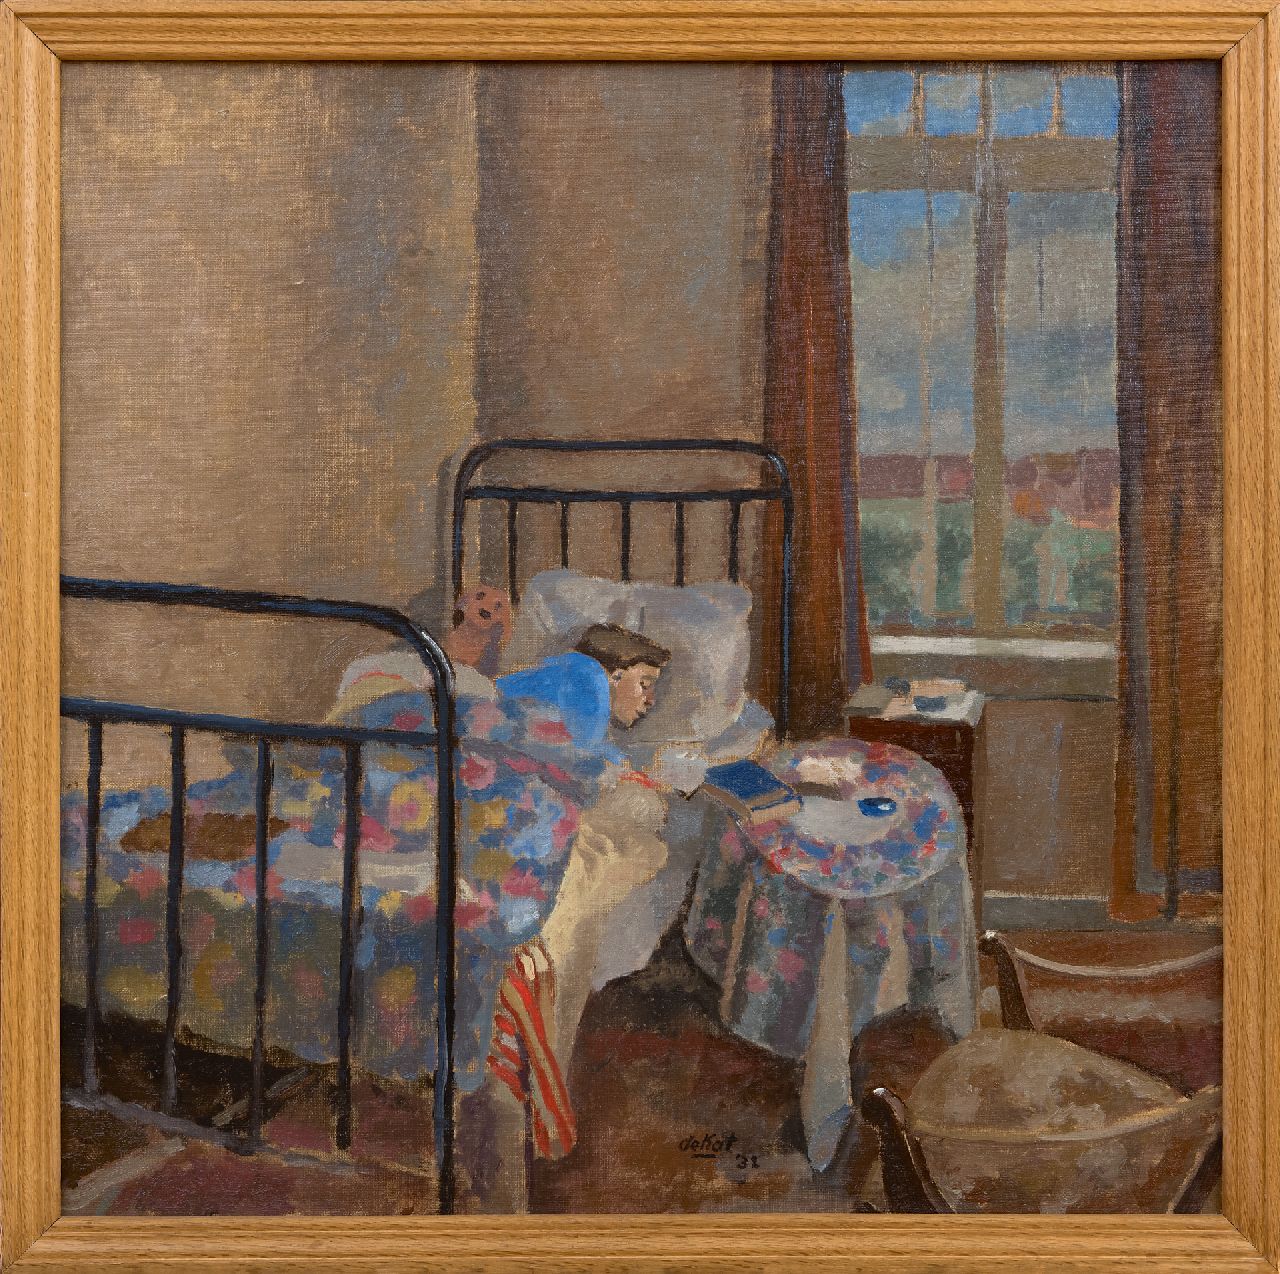 Kat O.B. de | 'Otto' Boudewijn de Kat | Paintings offered for sale | The painter's wife, Hans van Zijl, resting, oil on canvas 58.8 x 59.0 cm, signed l.c. and dated '32